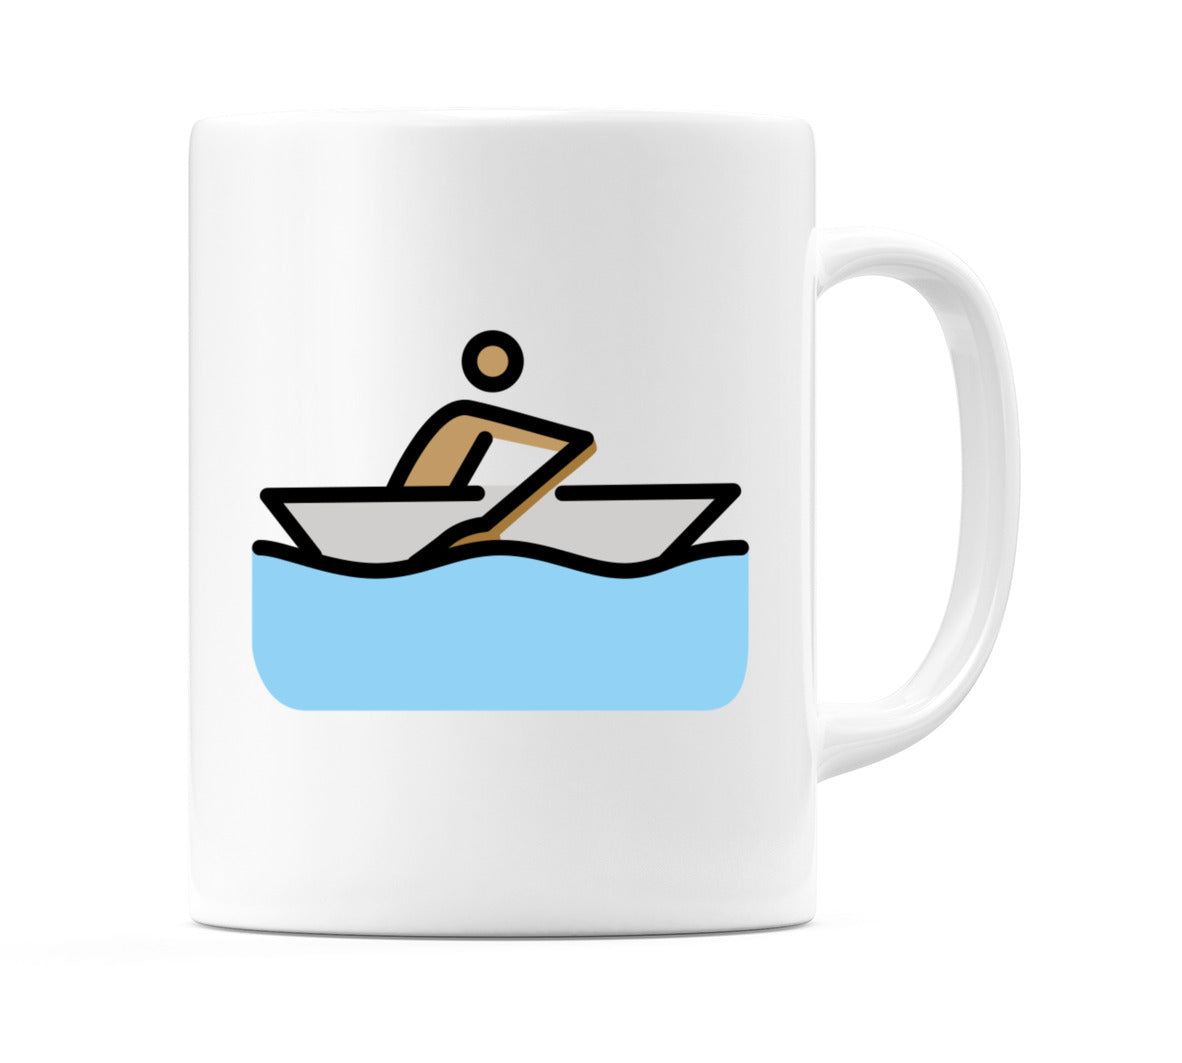 Person Rowing Boat: Medium Skin Tone Emoji Mug